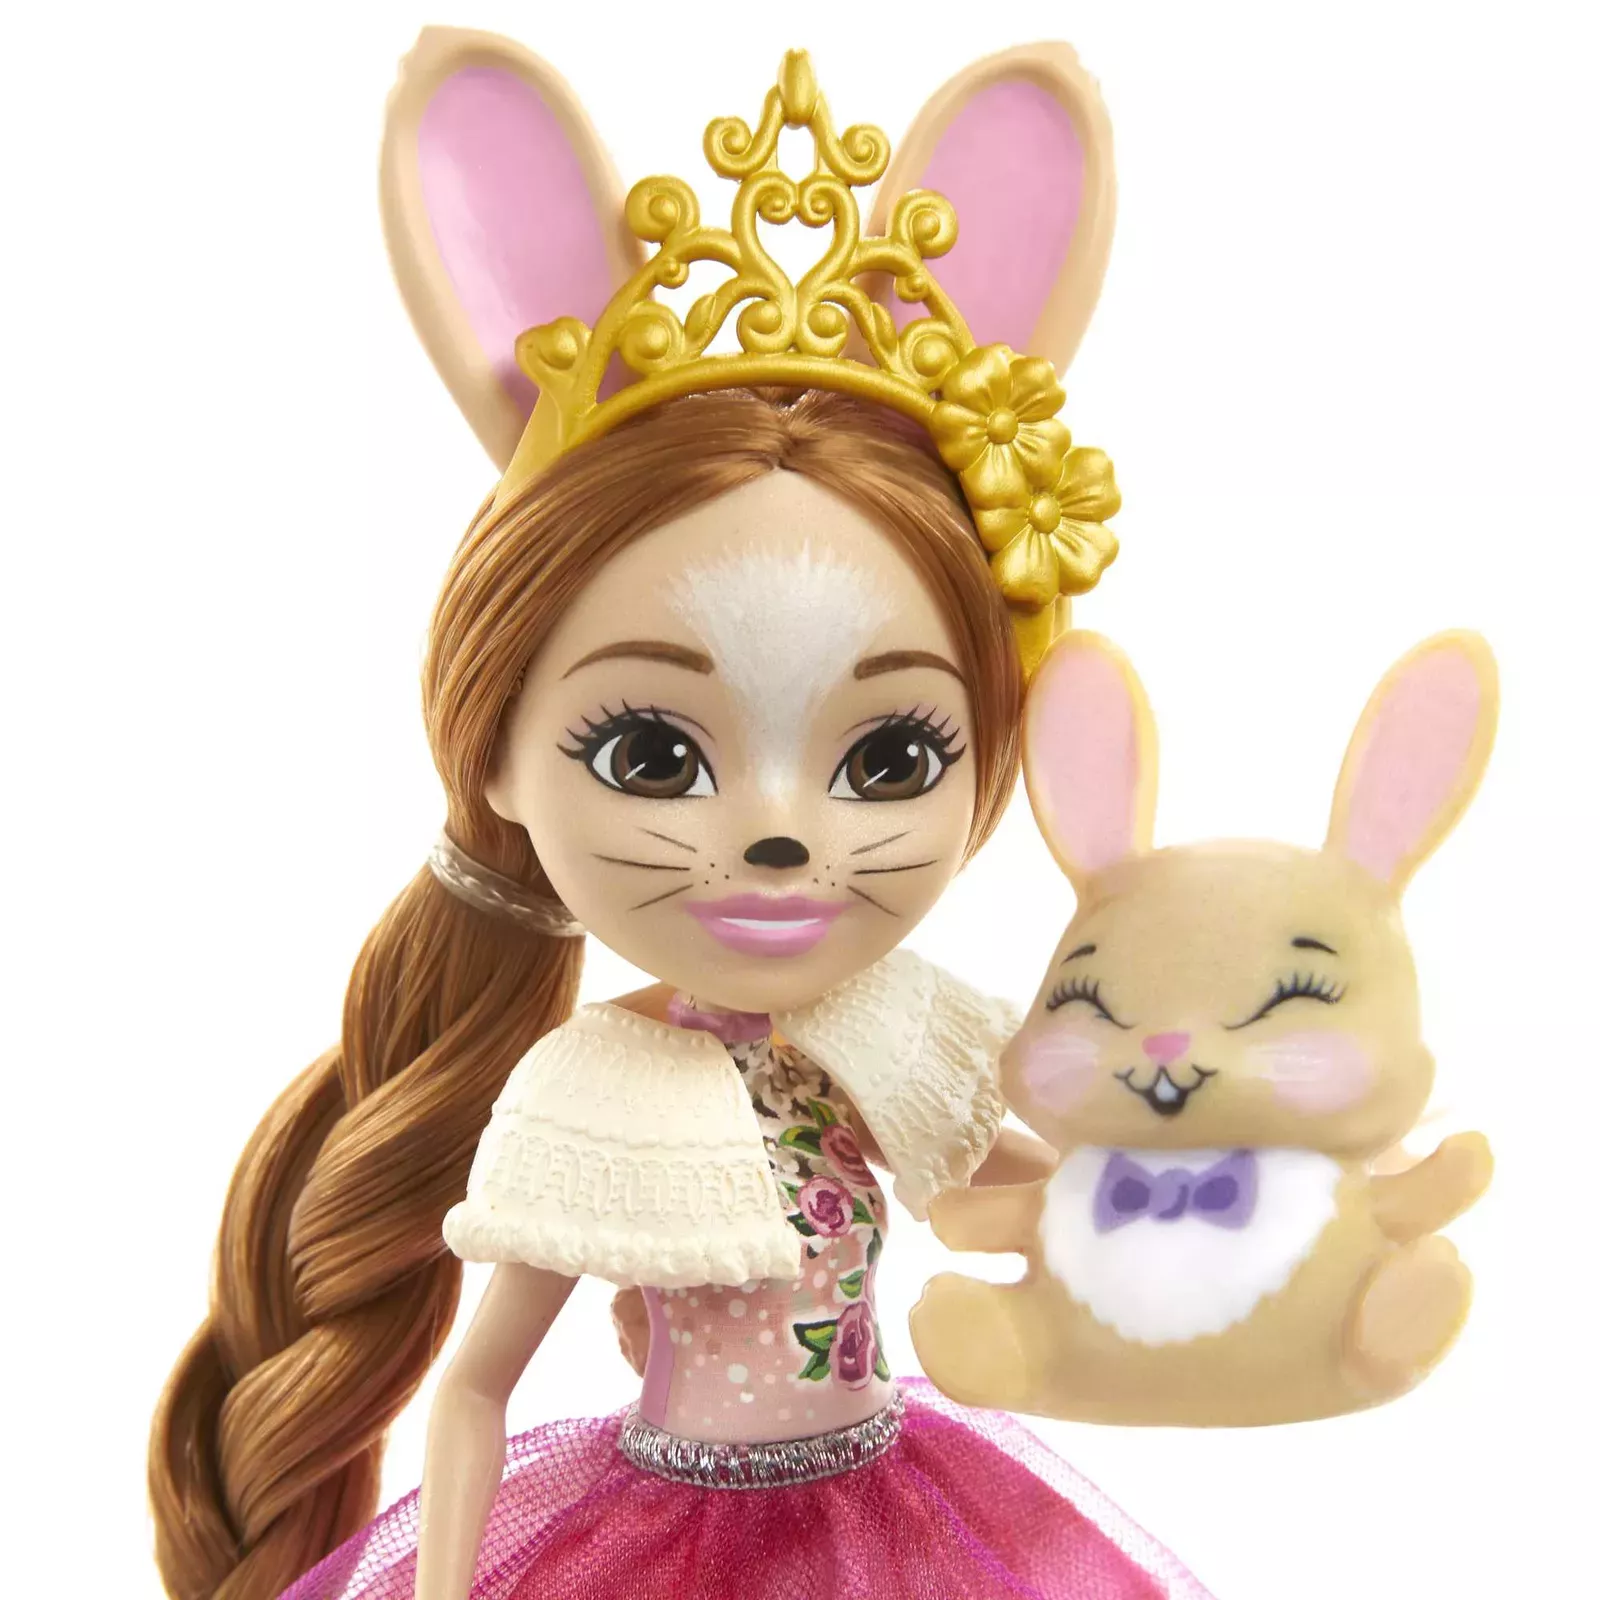 Royal Enchantimals Royal Brystal Bunny GYJ08, Game figurines